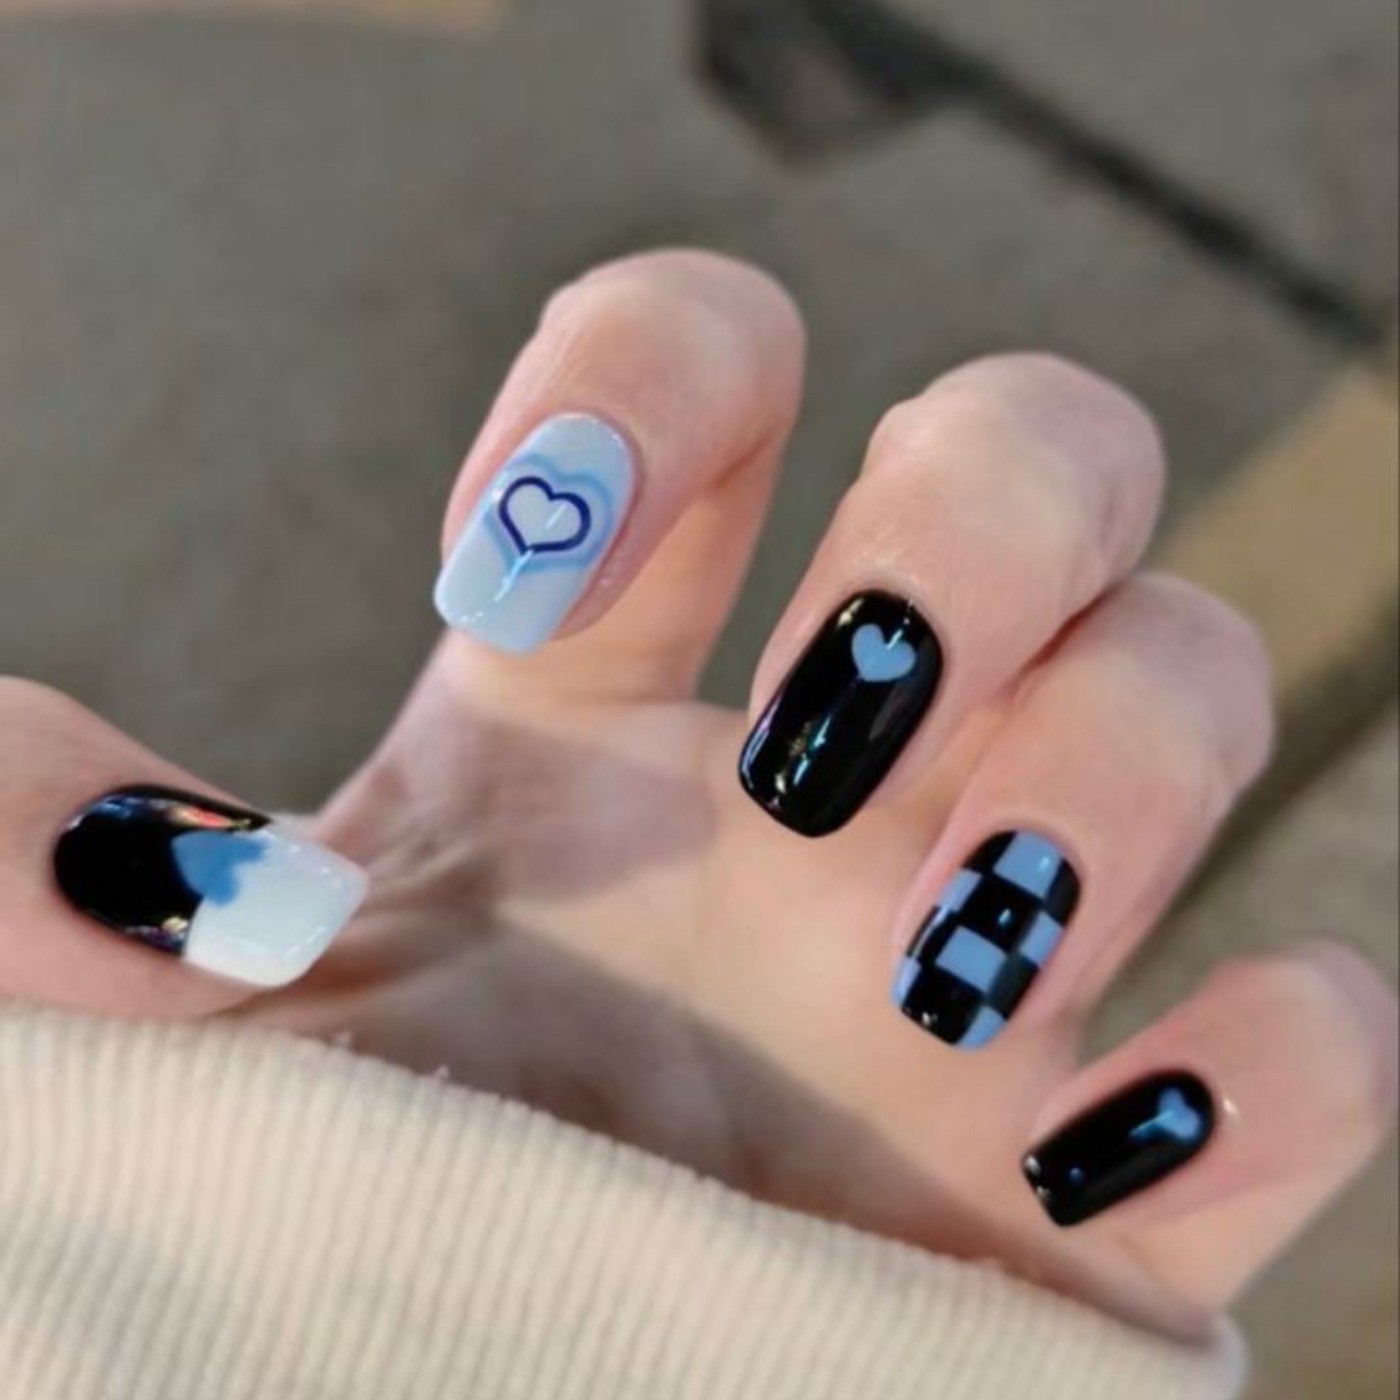 Simple girly gel nail design idea